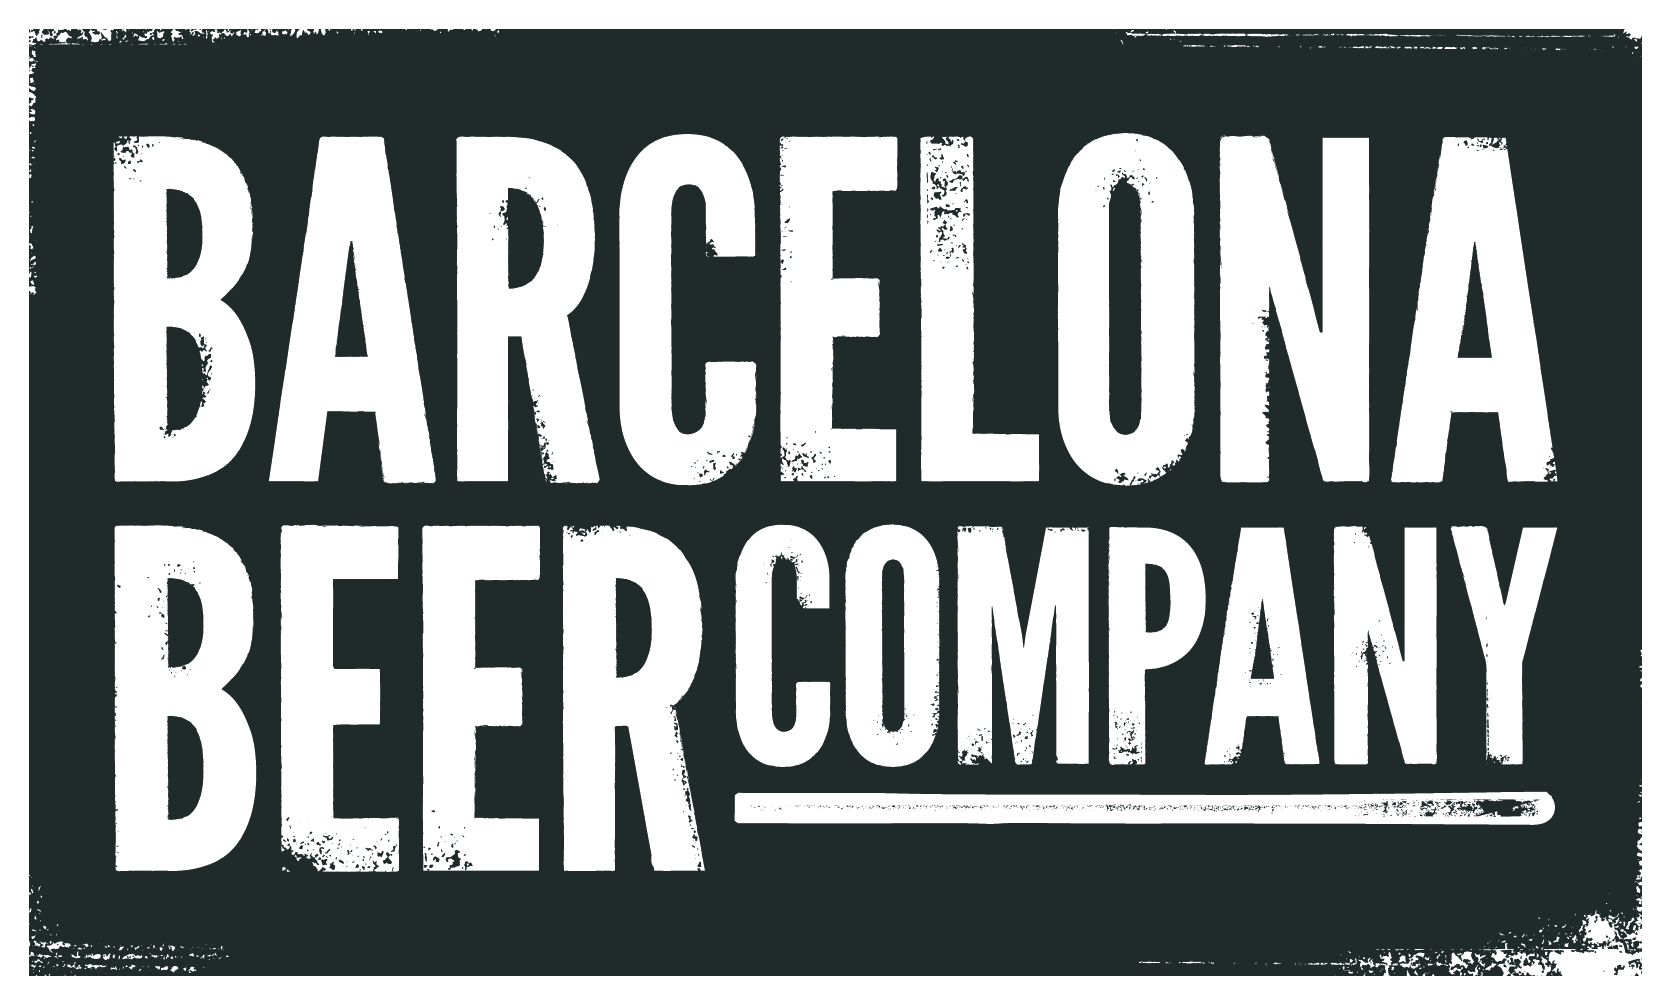 Barcelona Beer Company